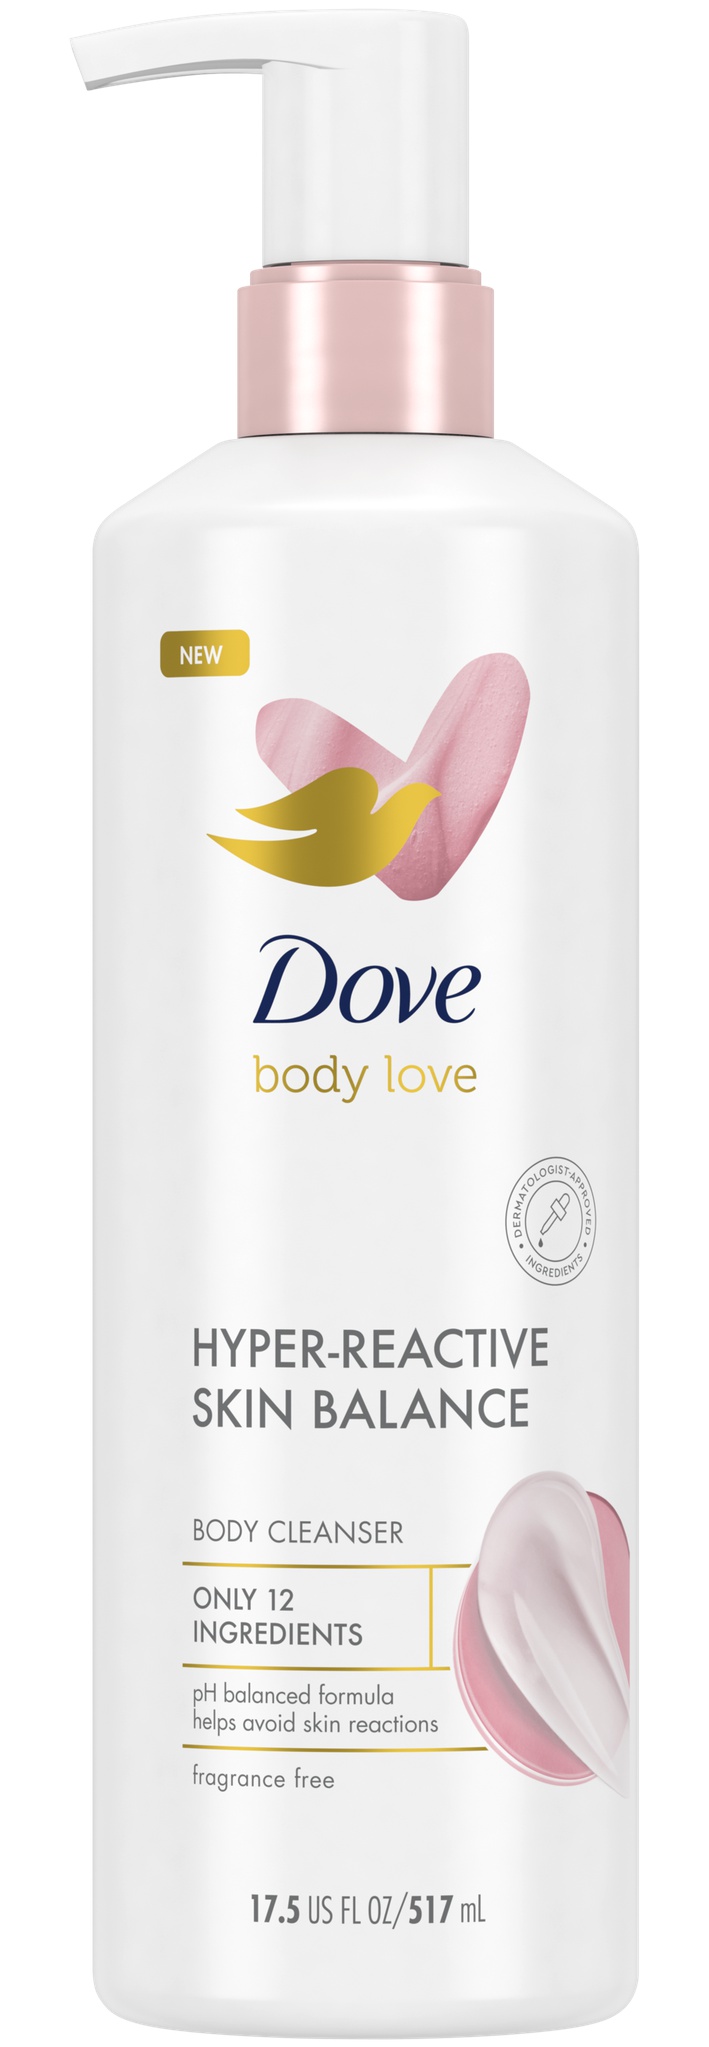 Dove Body Love Hyper-reactive Skin Balance Body Cleanser Fragrance Free